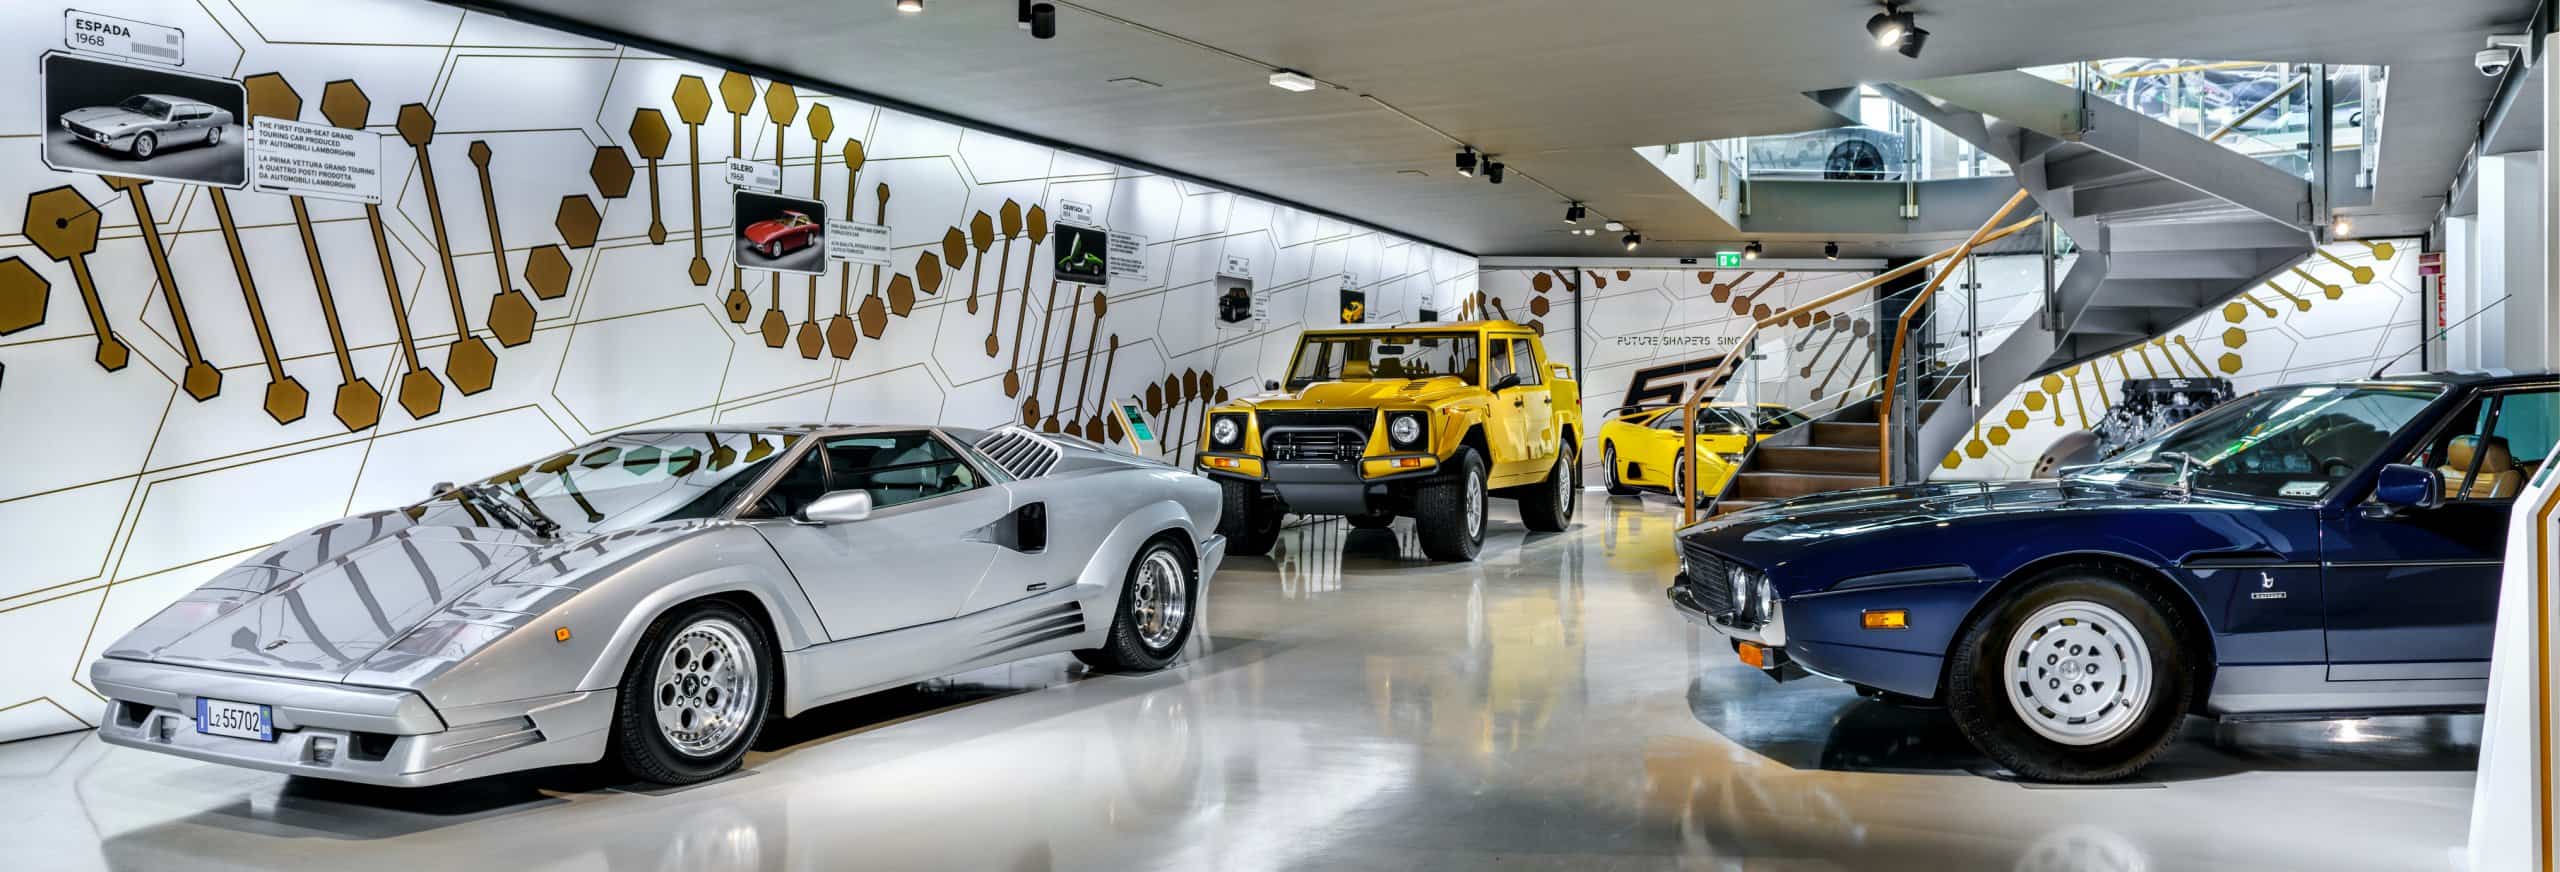 Lamborghini, Lamborghini, Canadian museums re-open to visitors, ClassicCars.com Journal